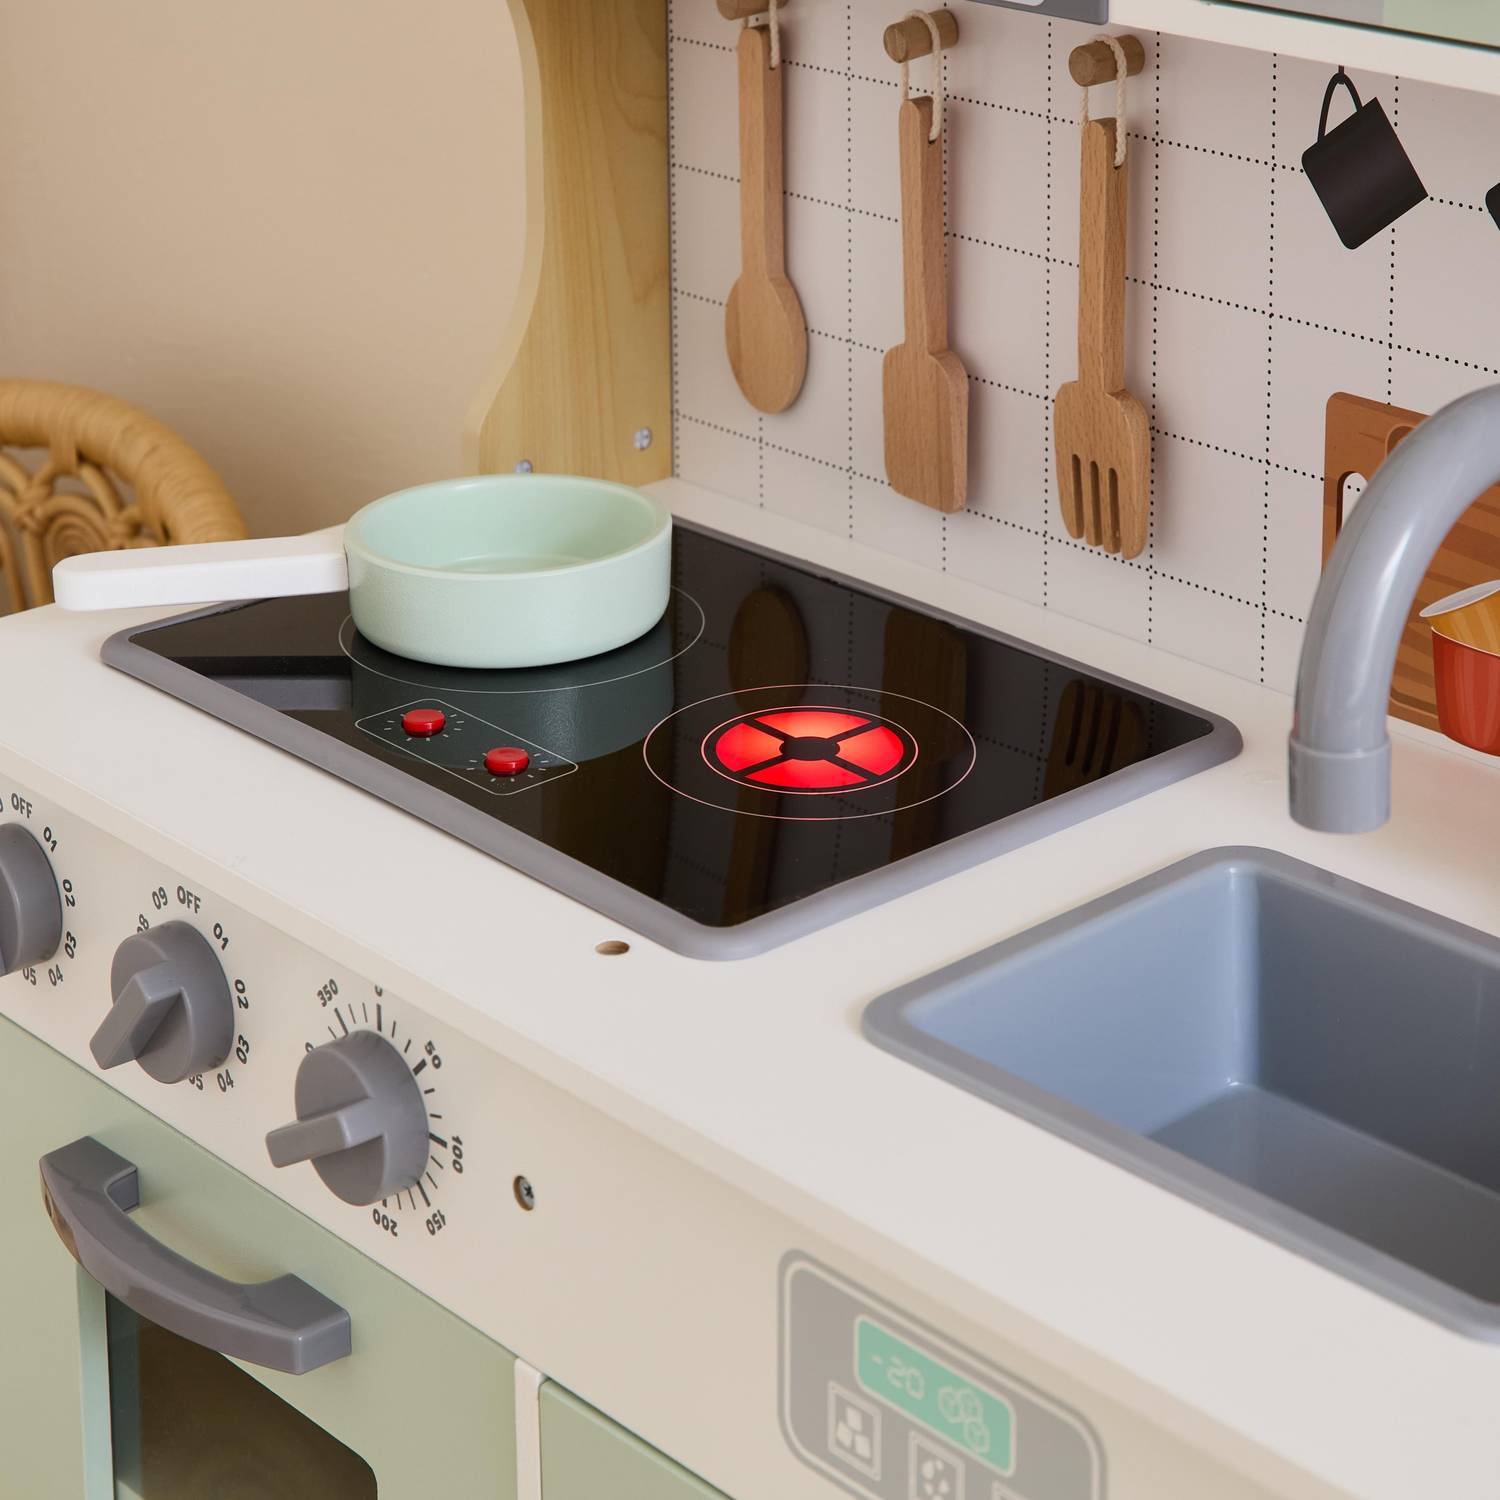 Panel de cocina infantil, accesorios incluidos, campana, placa de cocción, microondas electrónico Photo3